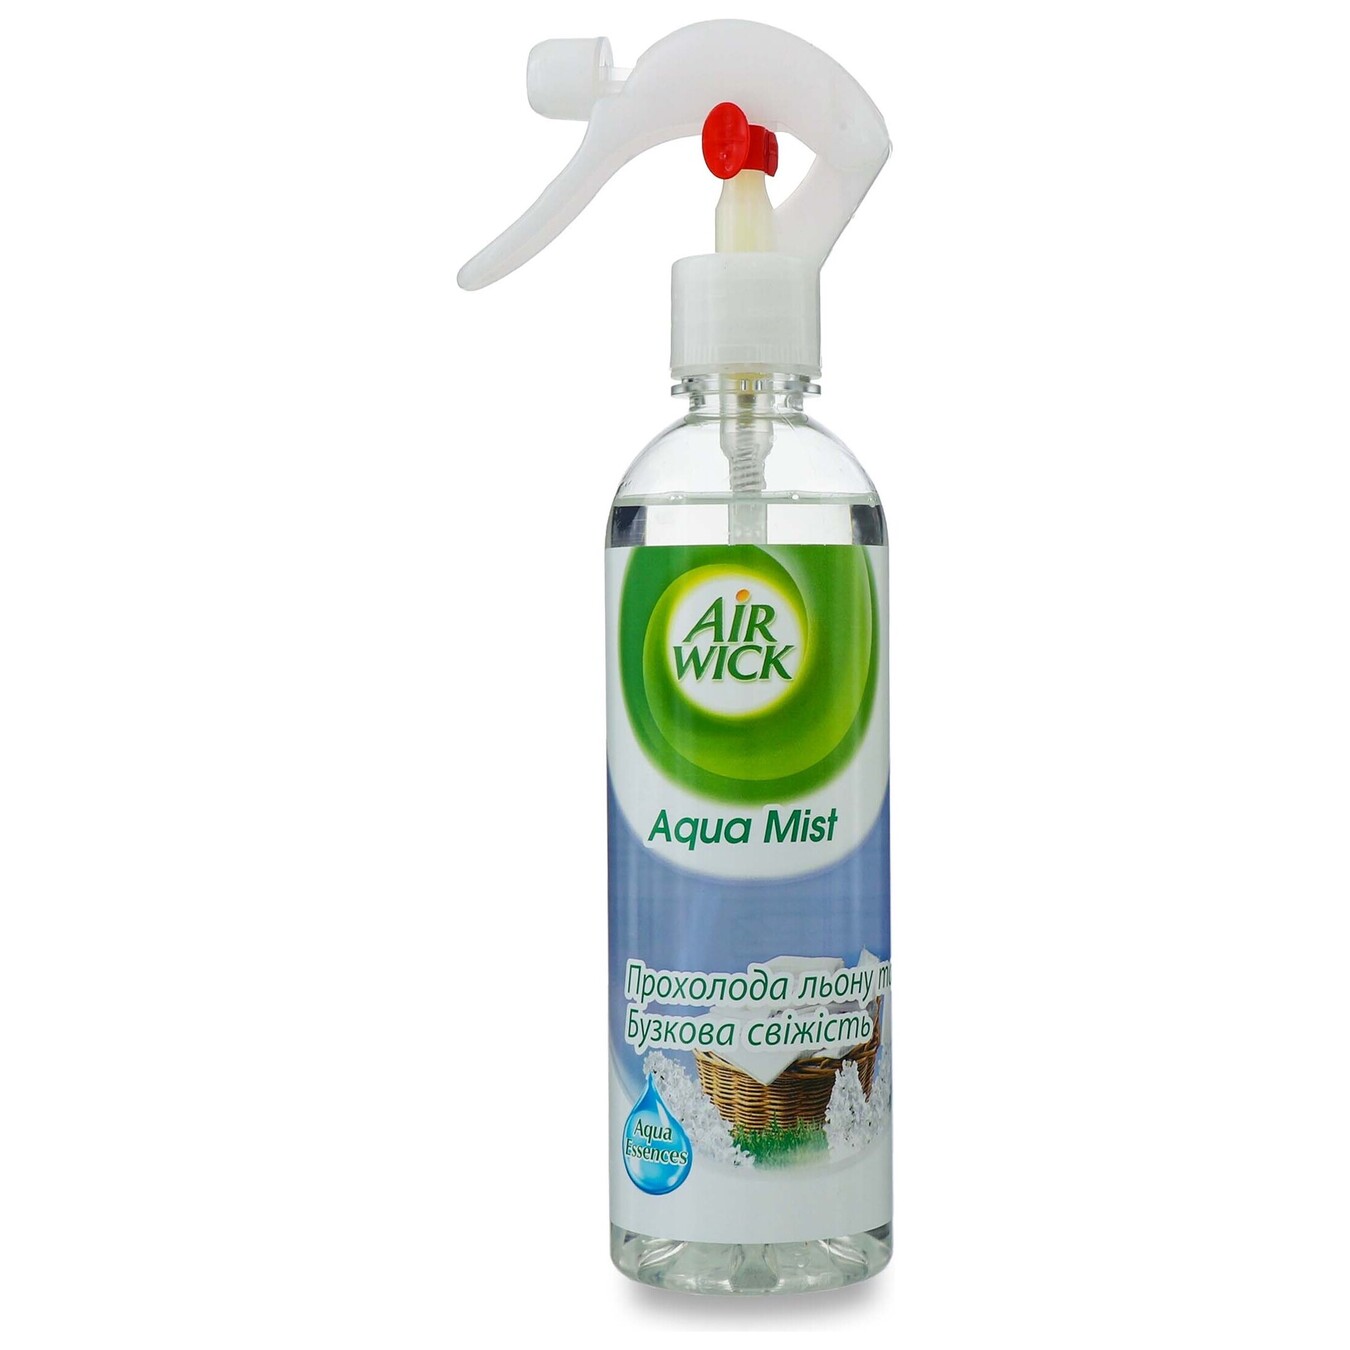 Air Wick fragrance air spray Aqua Mist Coolness of flax and lilac freshness